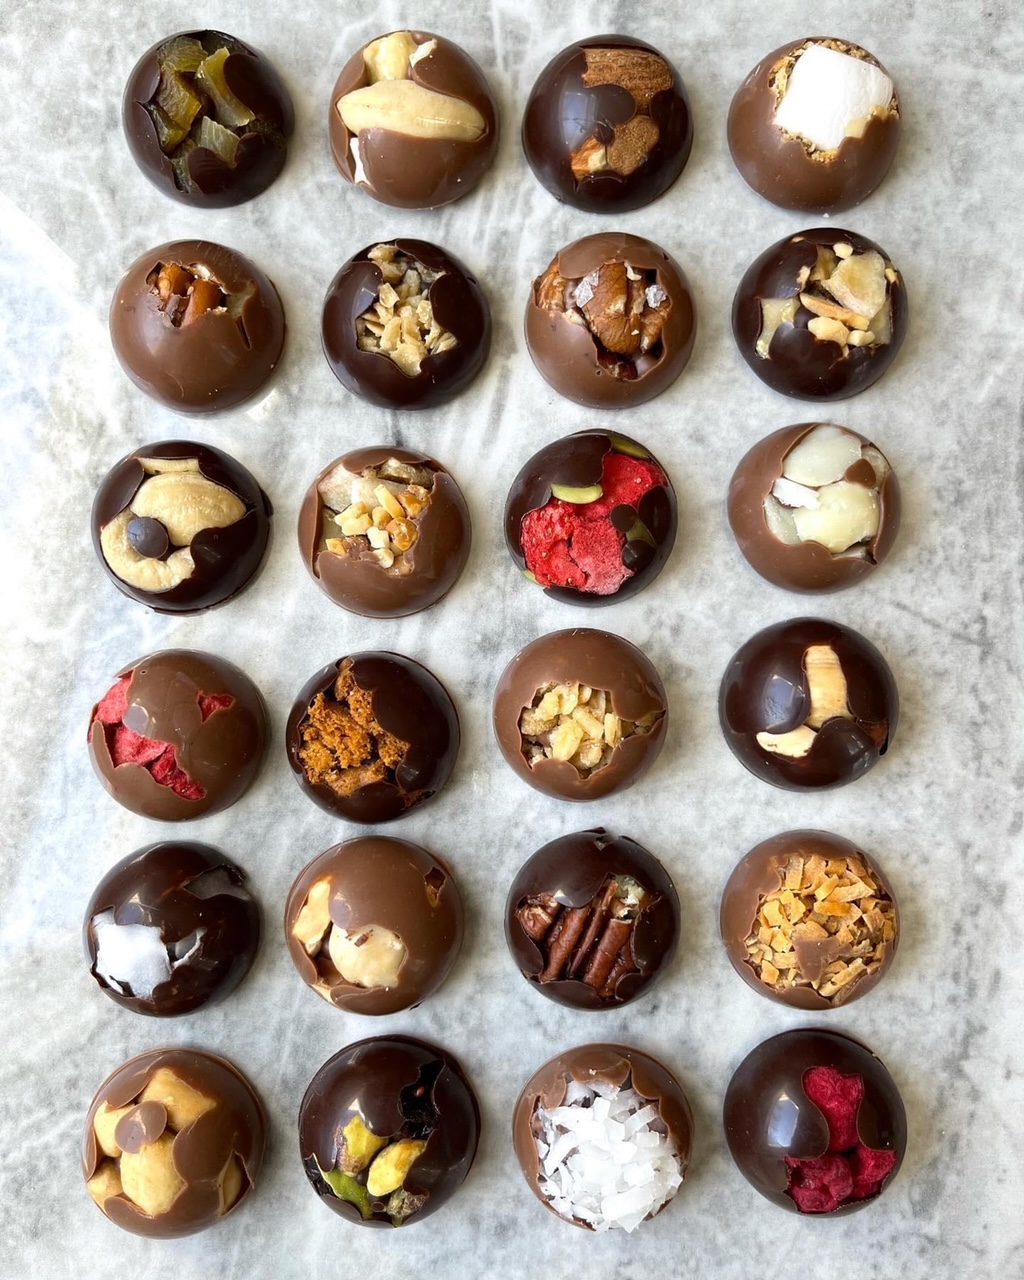 The Raw Confectionery, The Raw Confectionery is Creating Unique Handmade Chocolate Confections